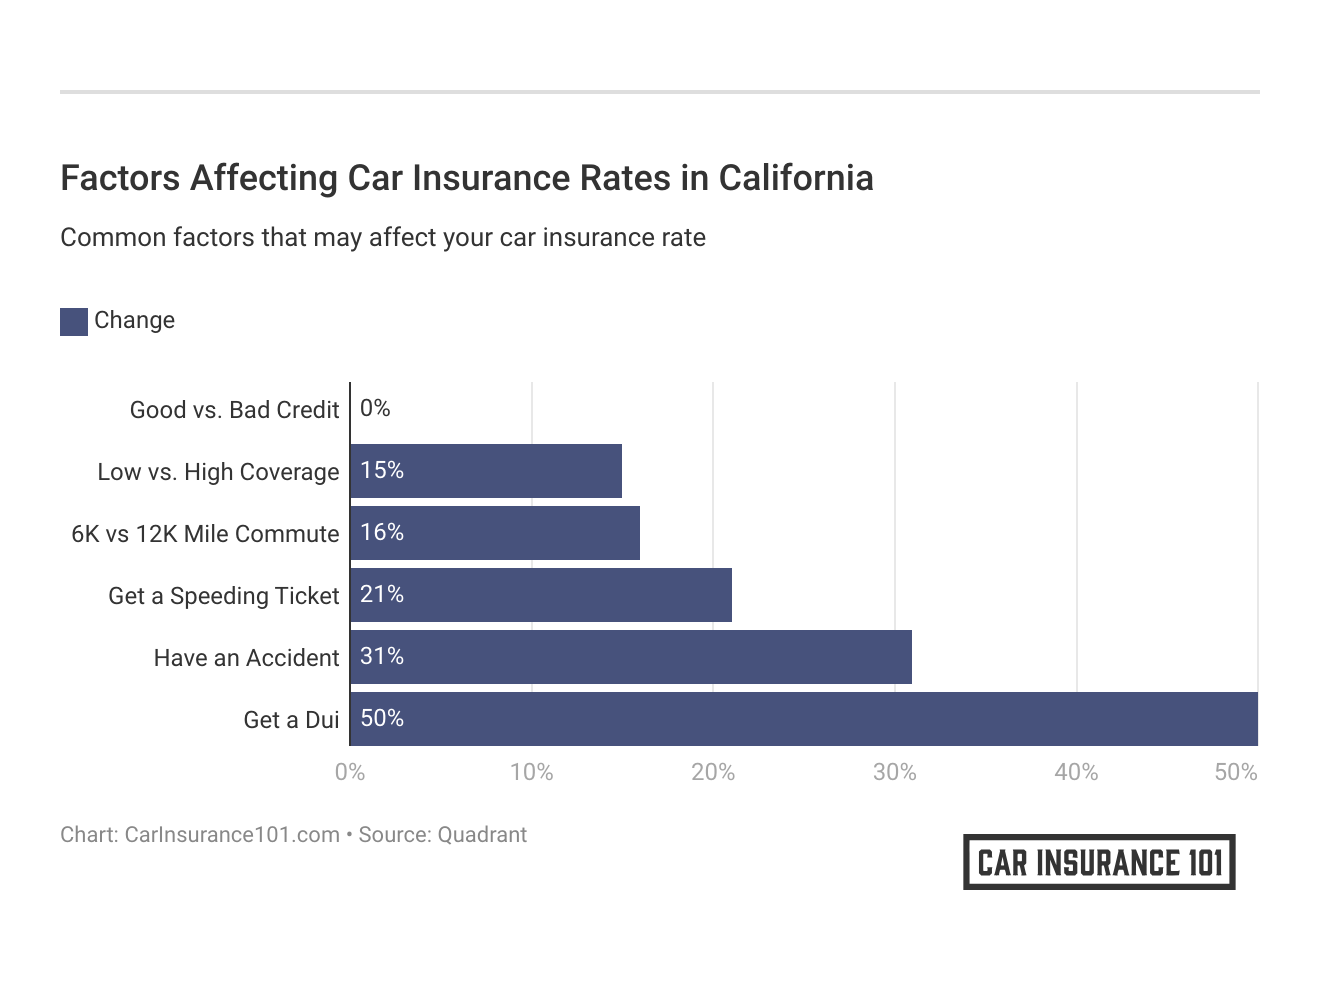 <h3>Factors Affecting Car Insurance Rates in California</h3>